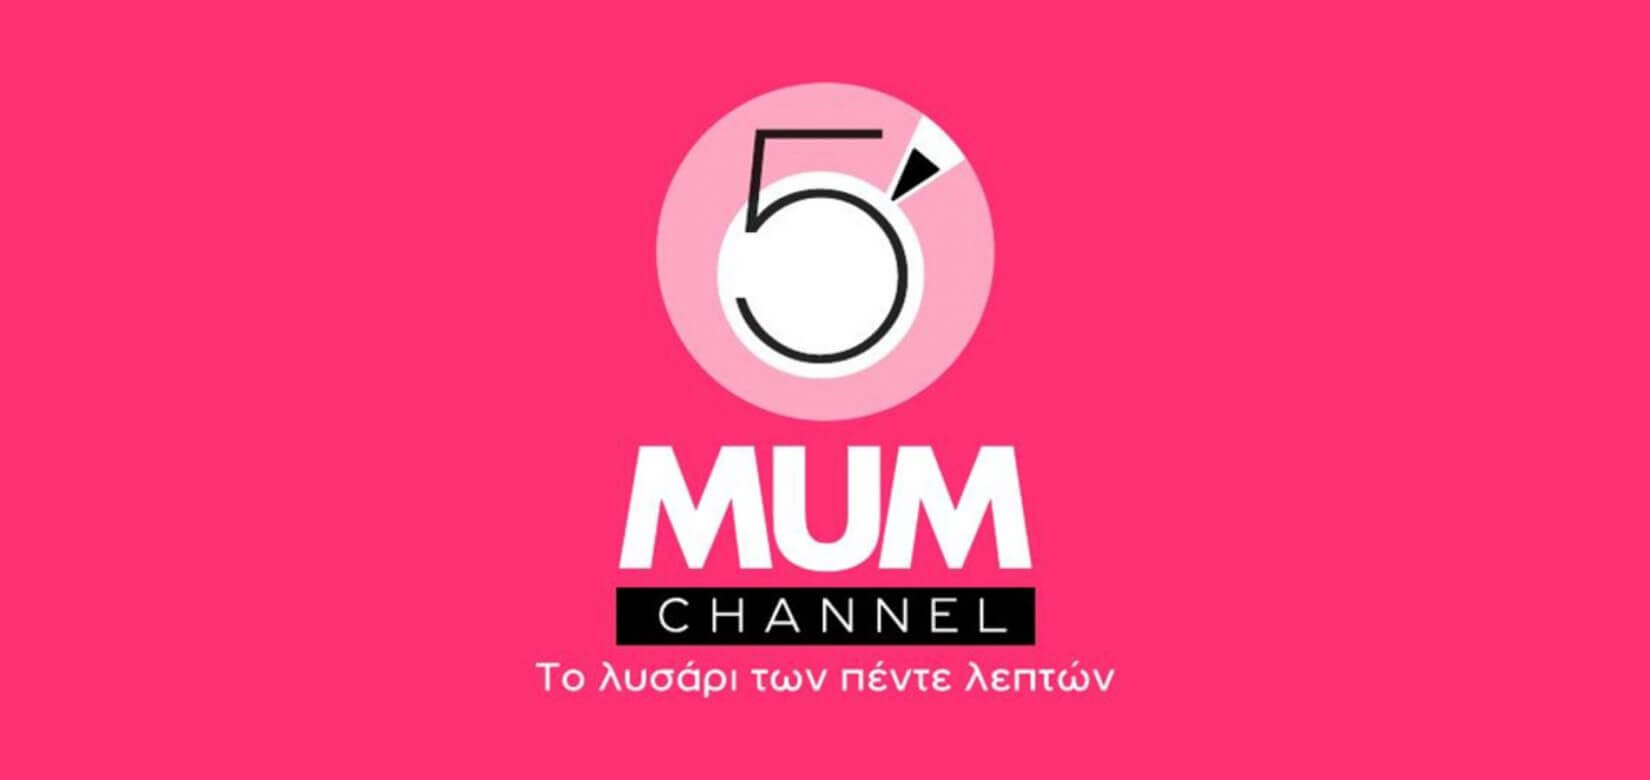 5’ minute mum: Το πρώτο διαδικτυακό κανάλι για μαμάδες είναι εδώ!